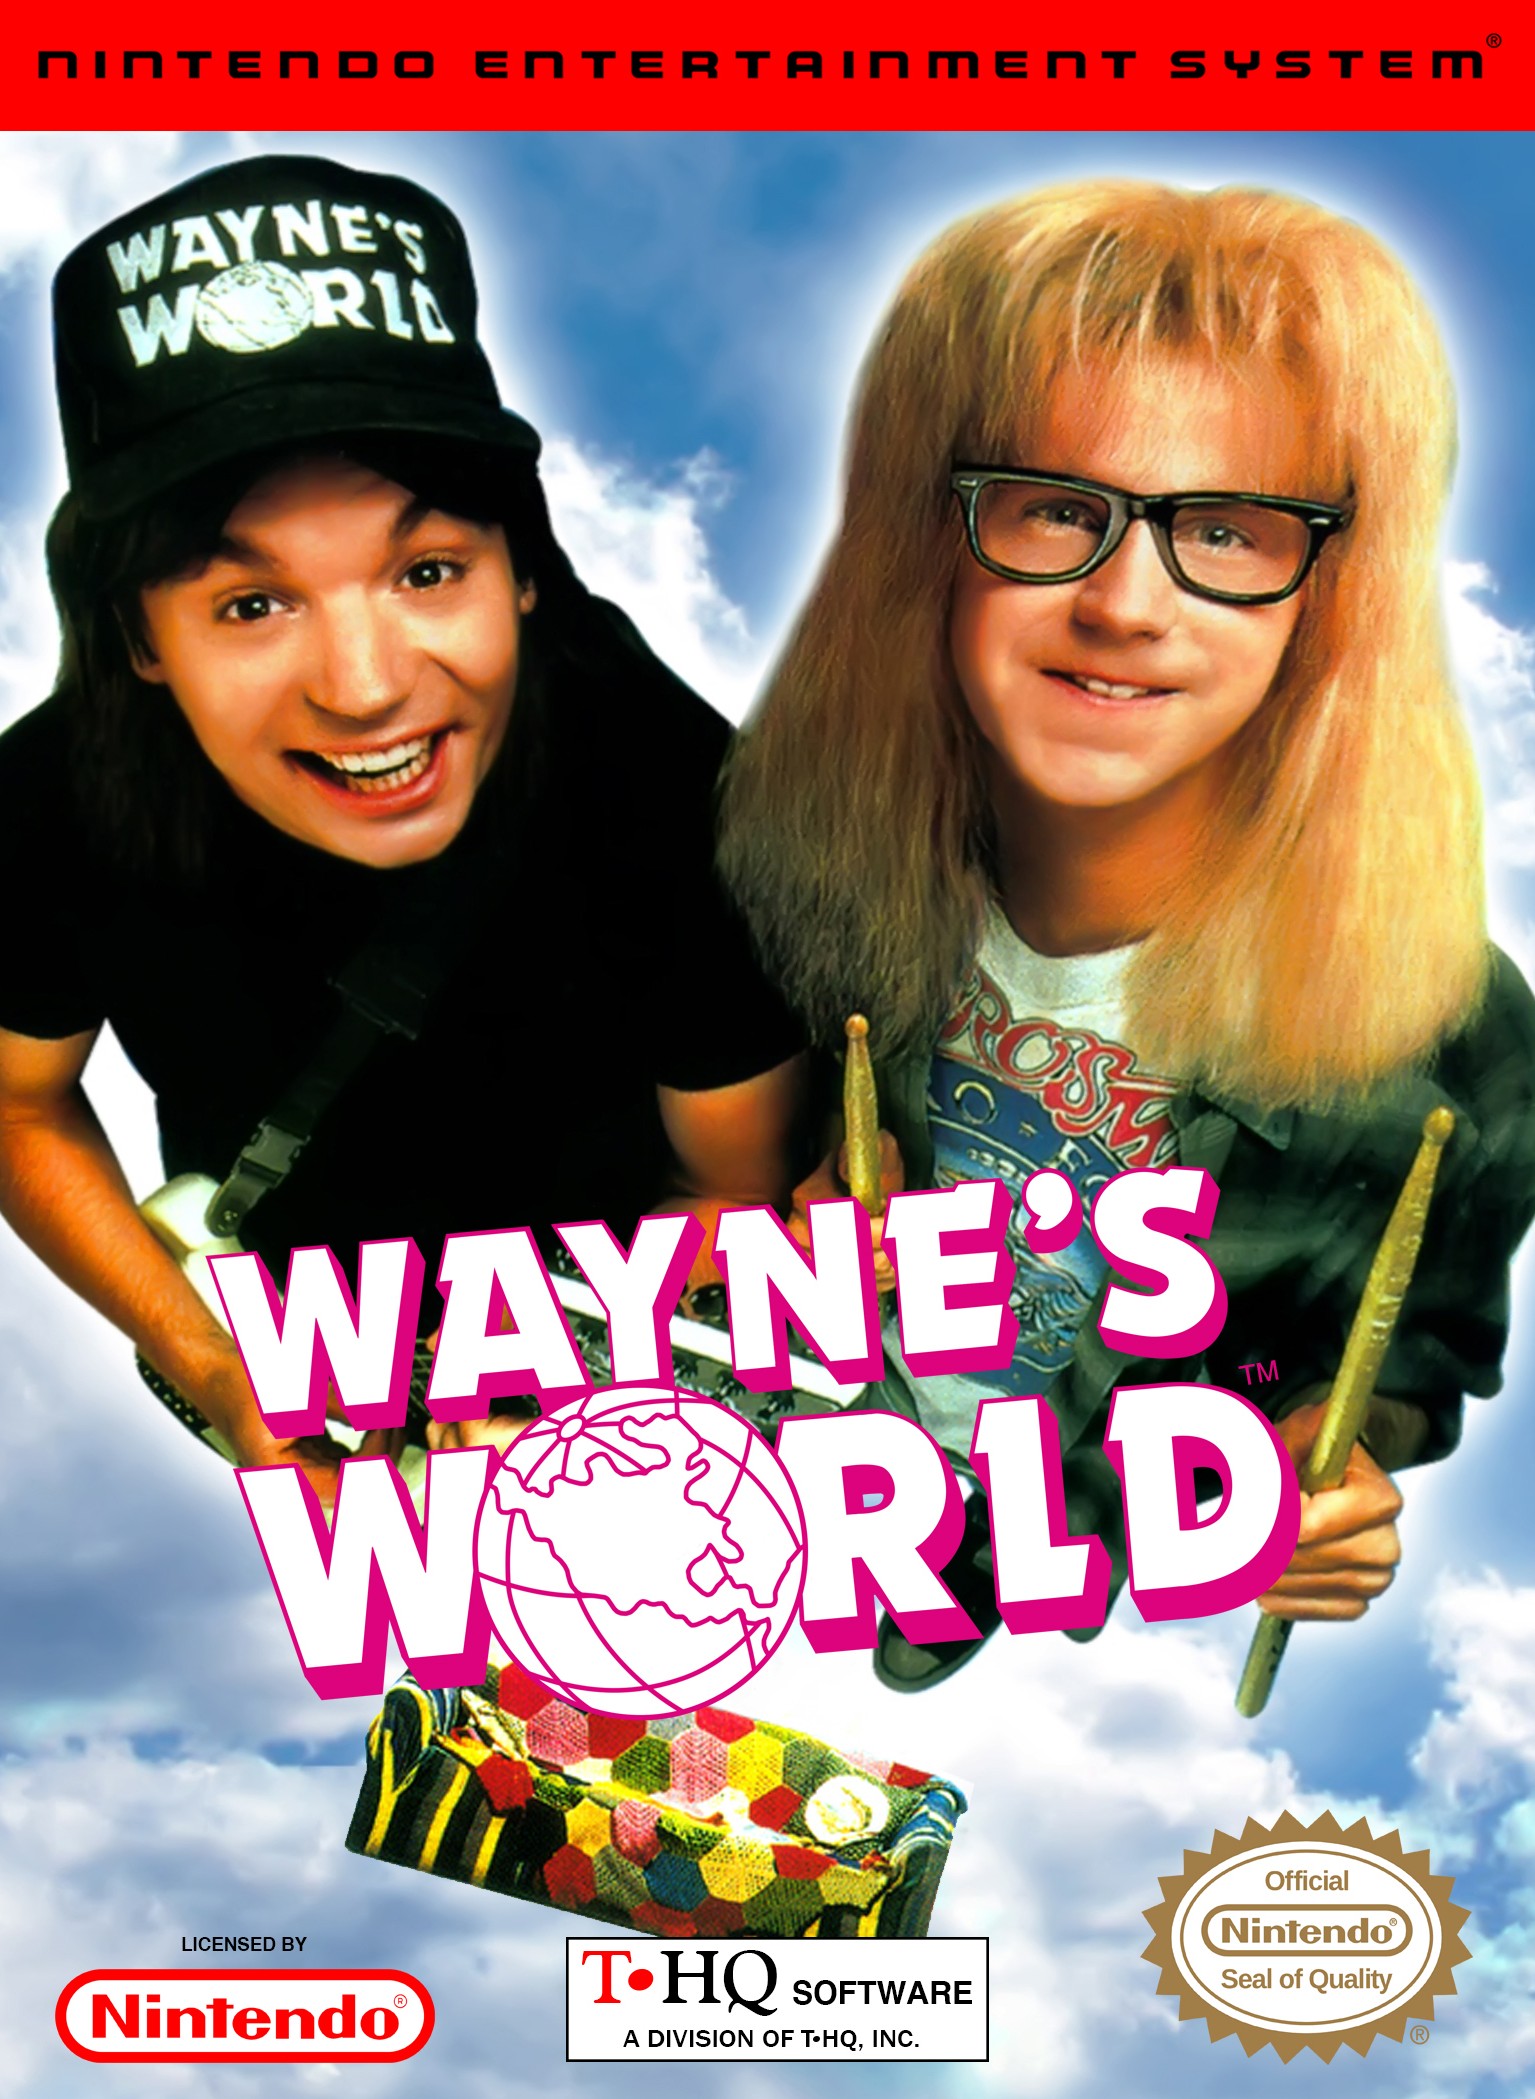 'Wayne's World'